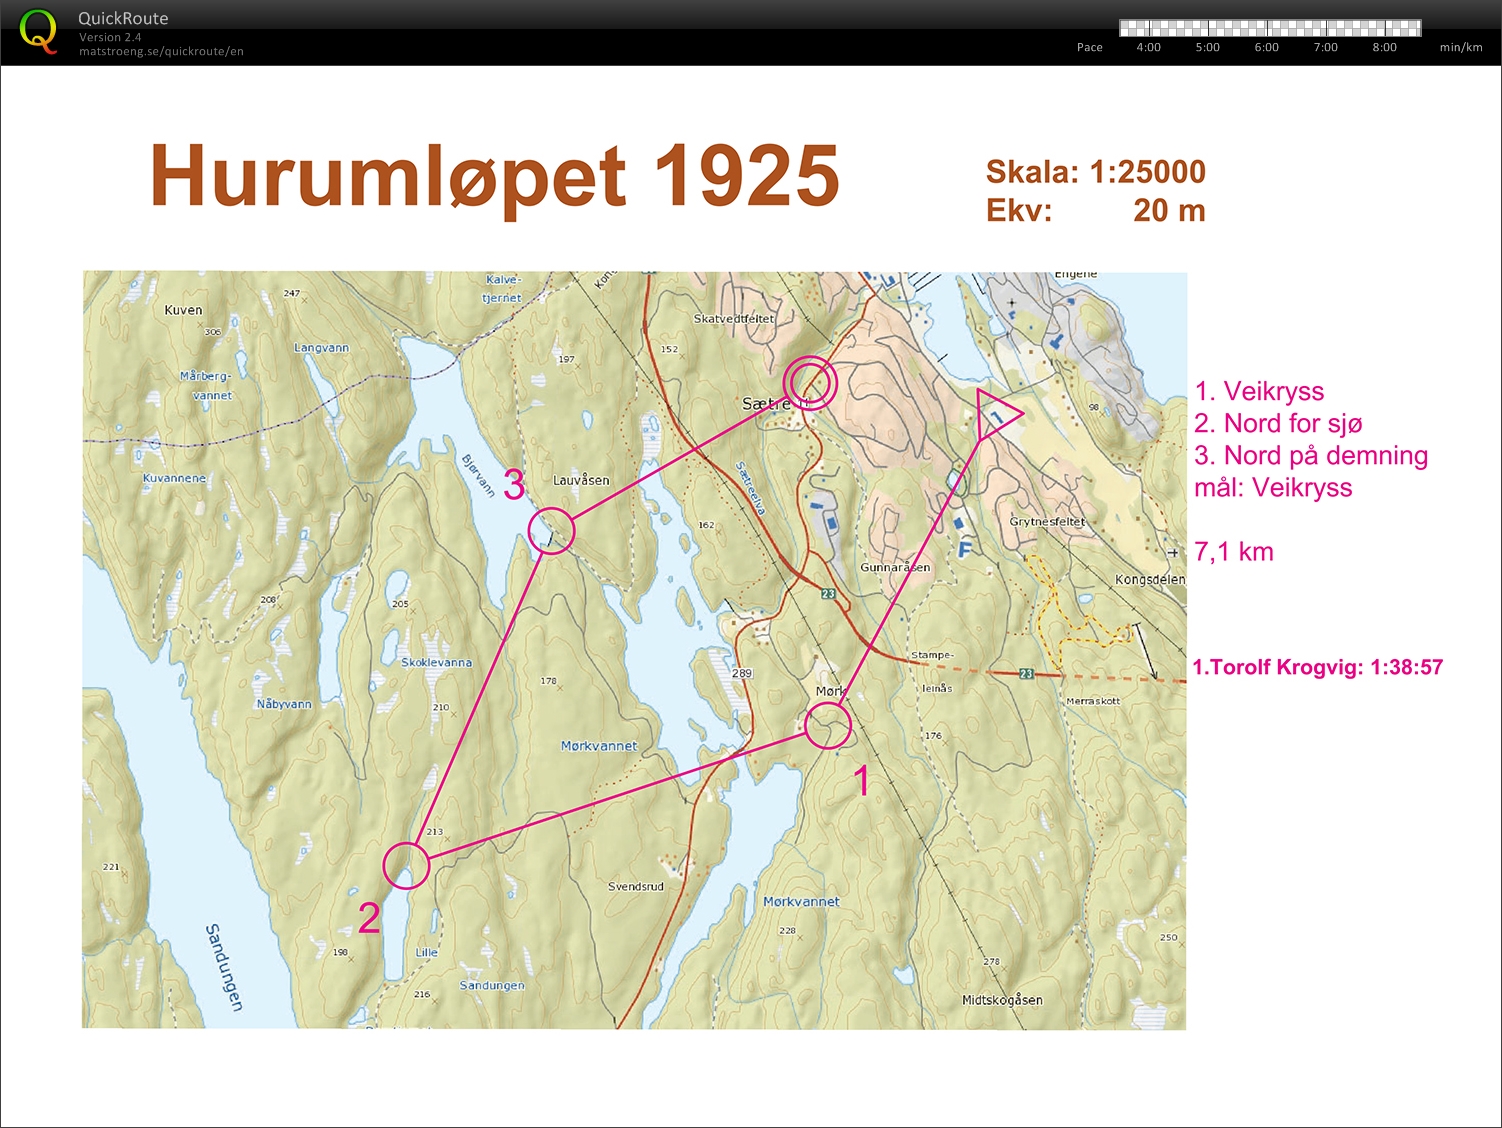 Hurumløpet 1925, Rerun (14/05/2014)